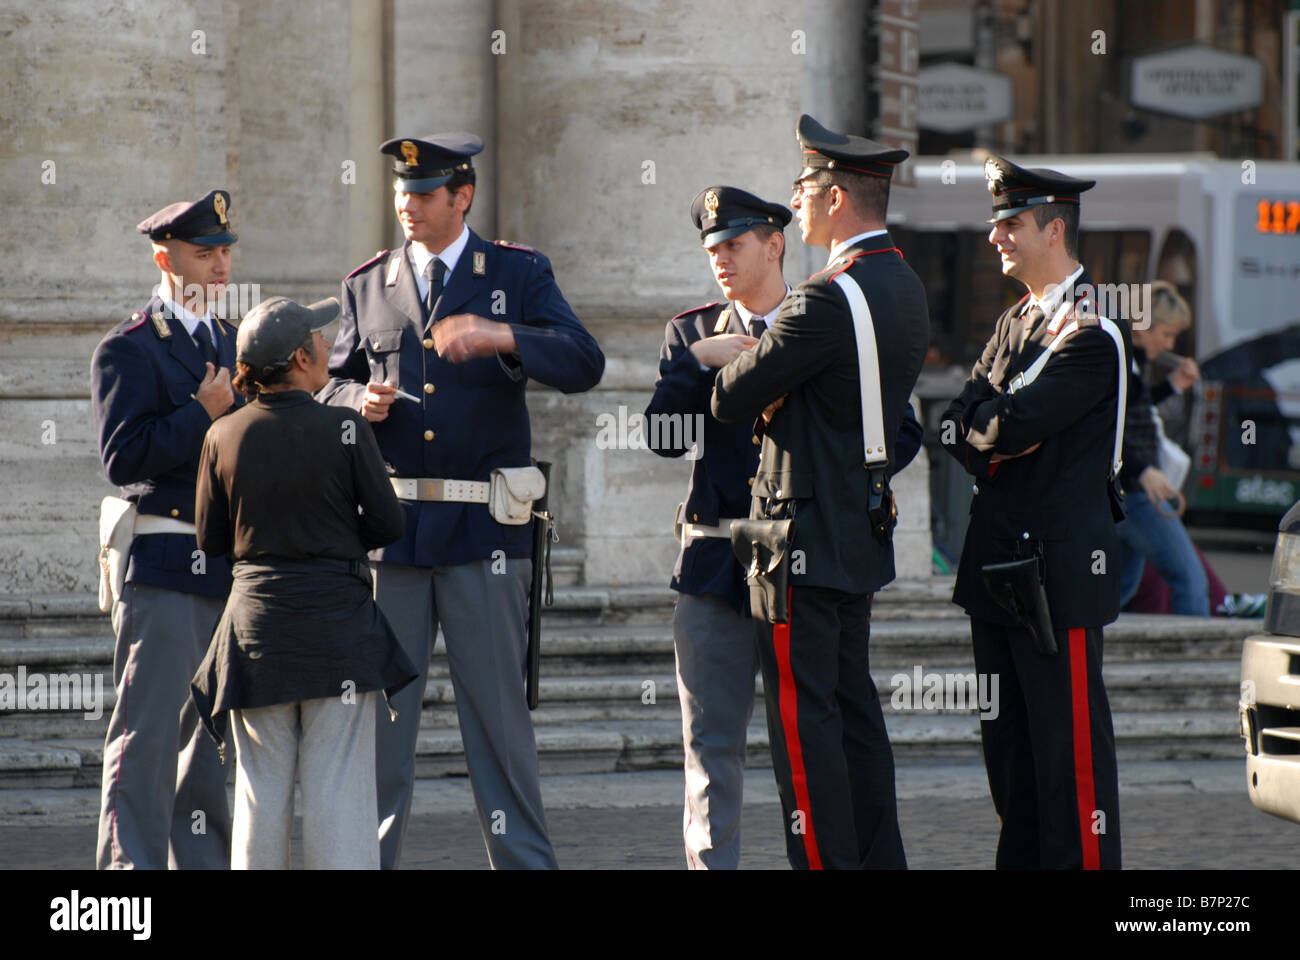 Police men giving a tourist directions in Piazza Del Popolo Rome Italy Stock Photo